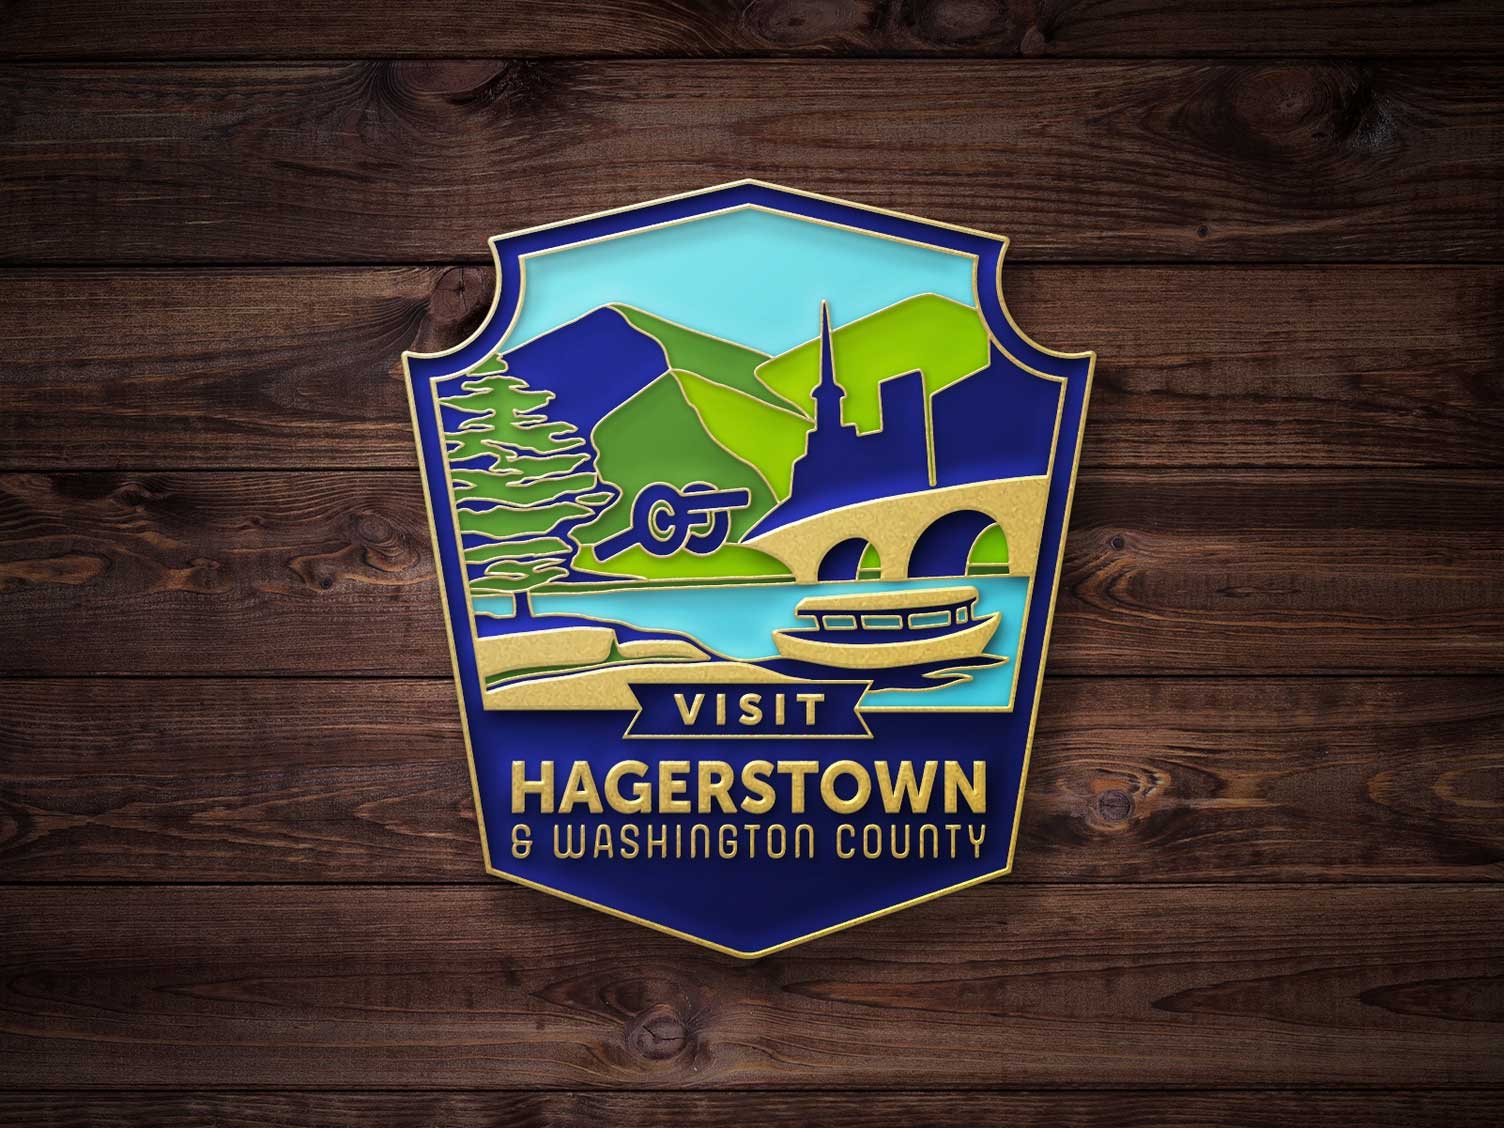 Visit Hagerstown & Washington County Pin Design